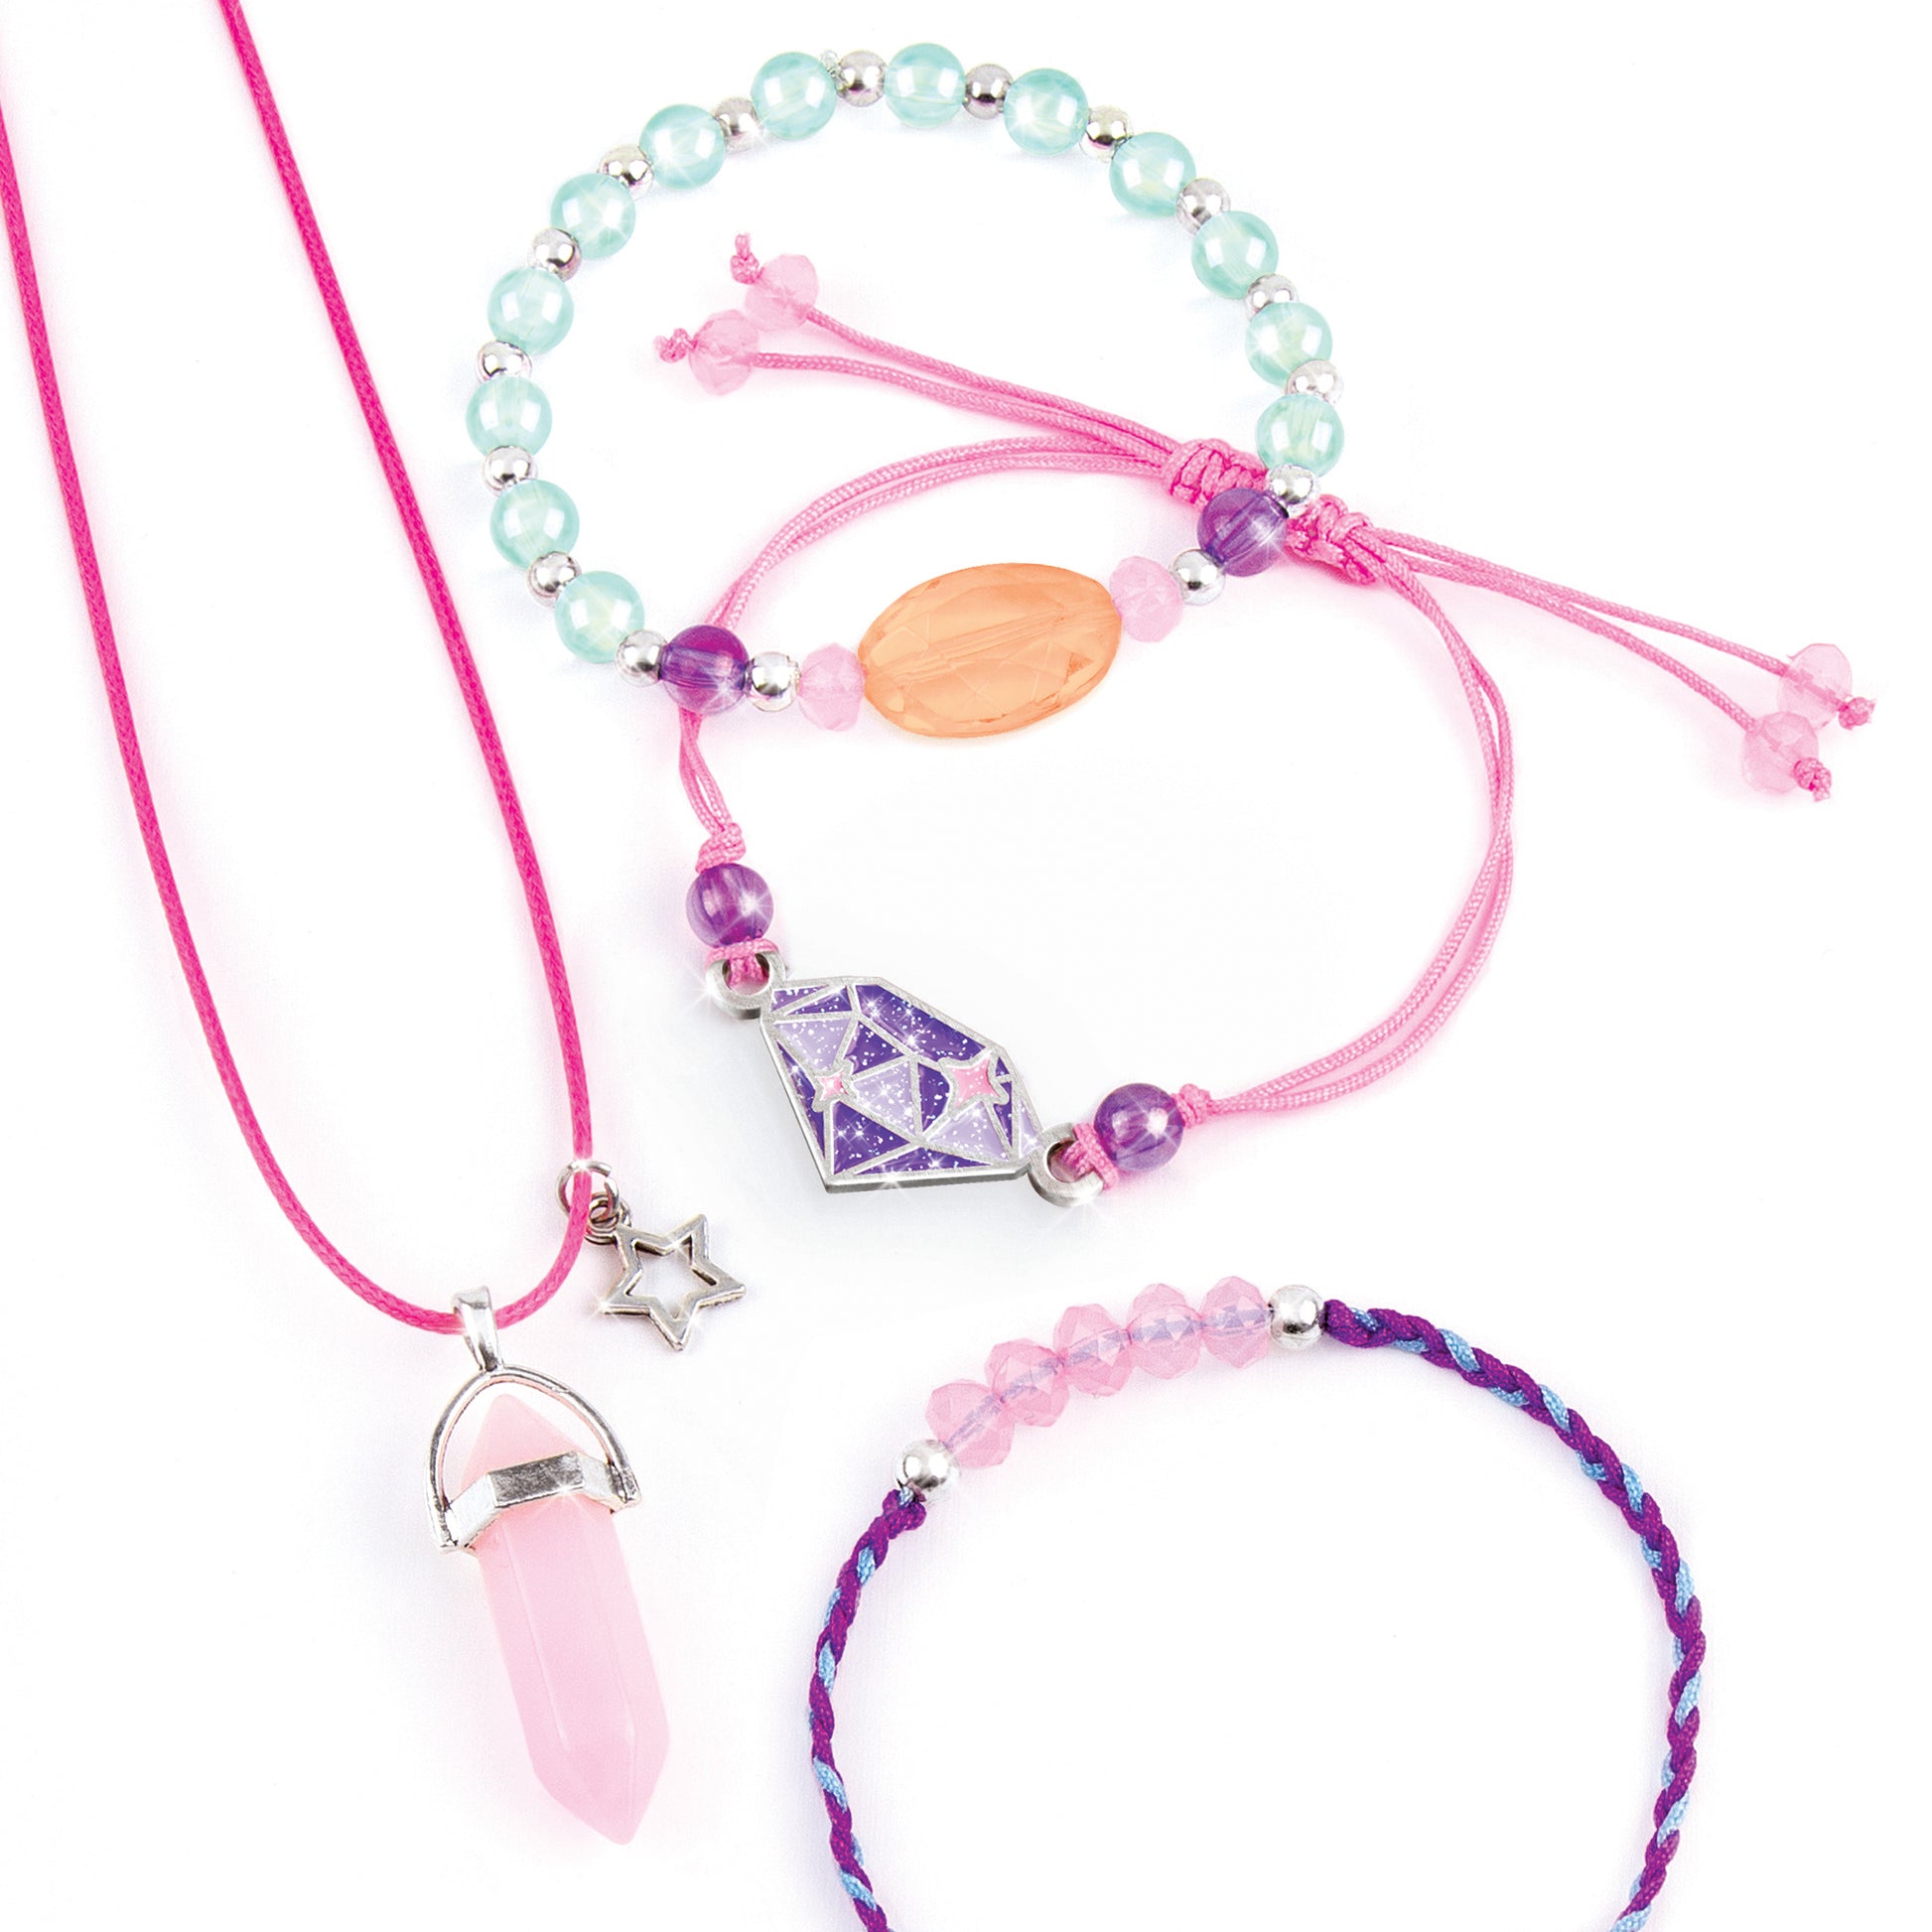 Order kids' jewelry with gemstones